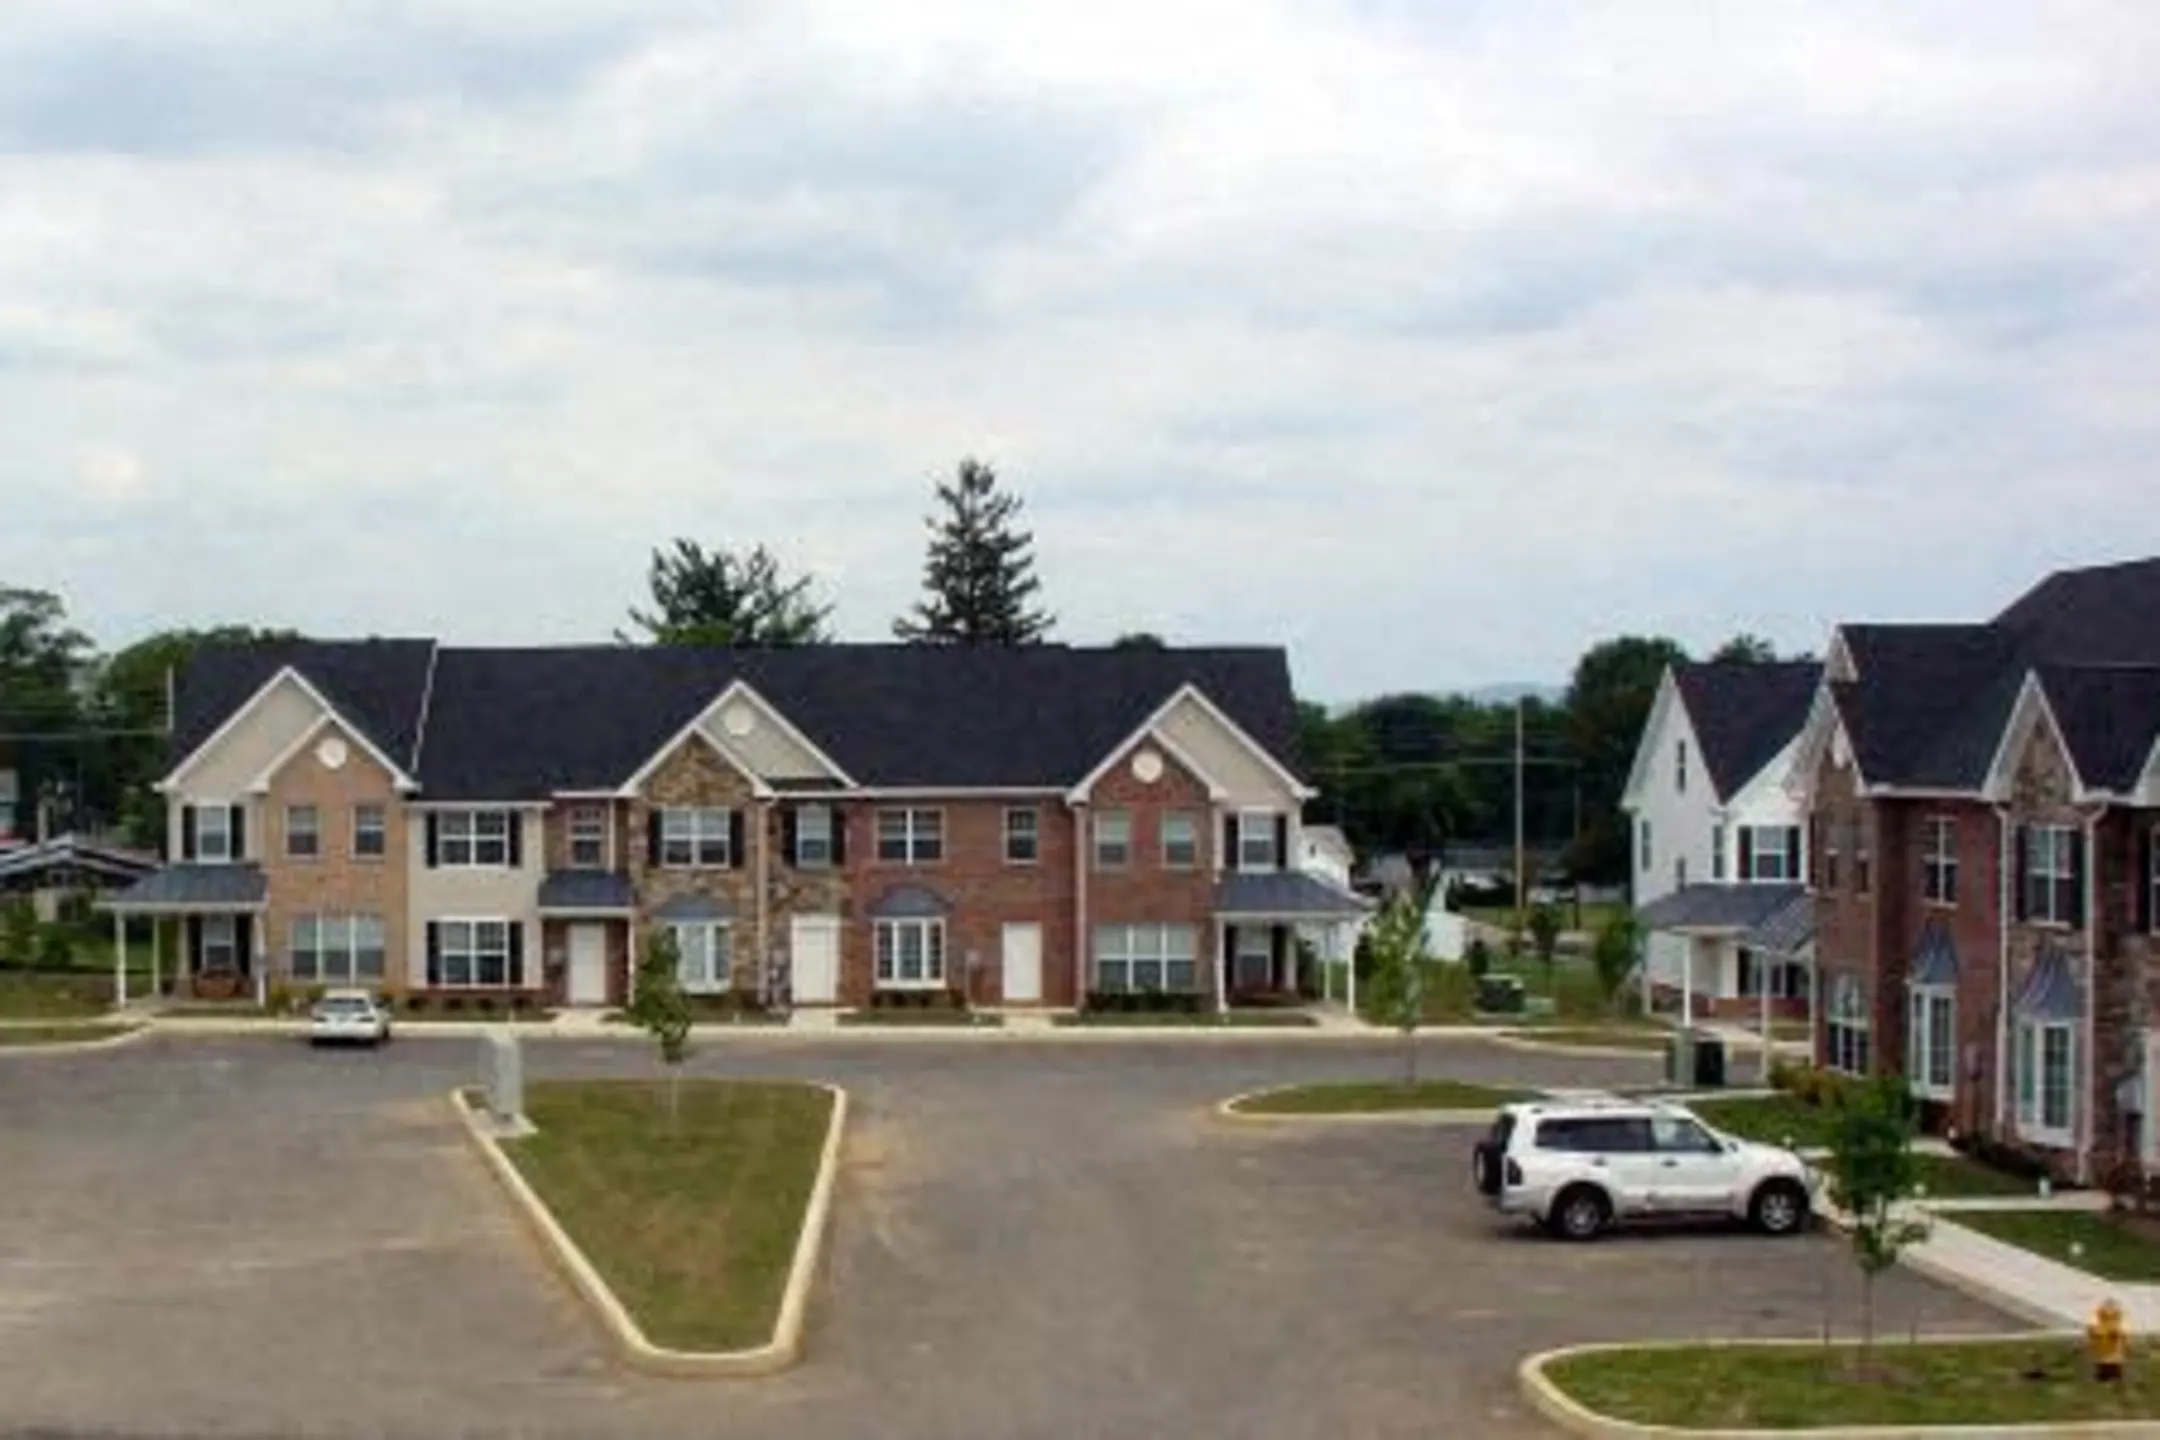 Building - Avalon Townhomes - Waynesboro, PA